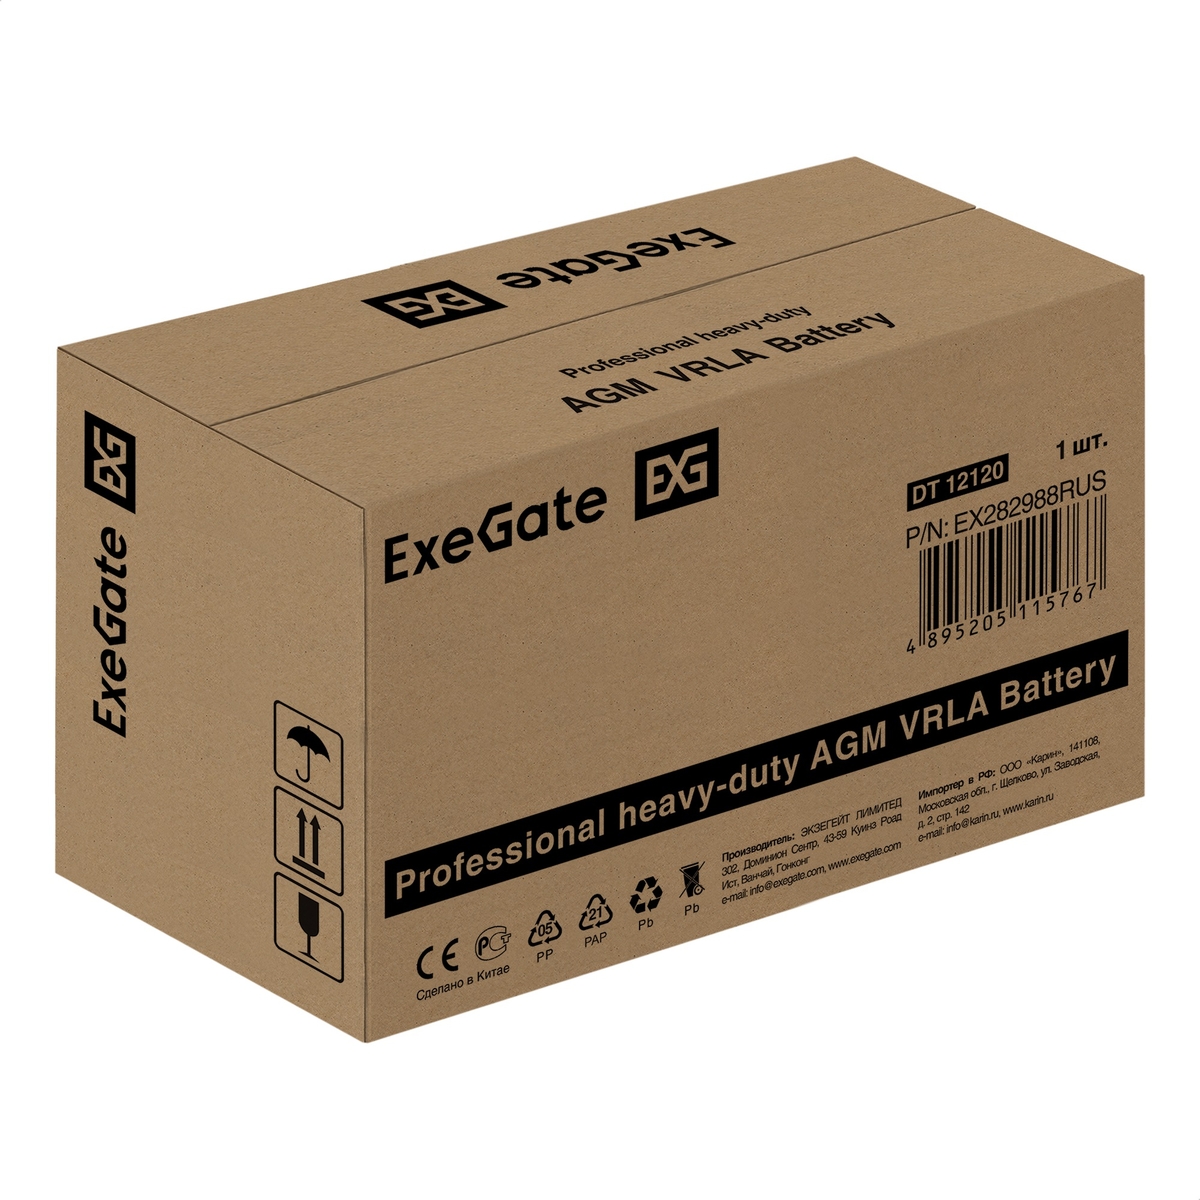 Battery ExeGate DT 12120